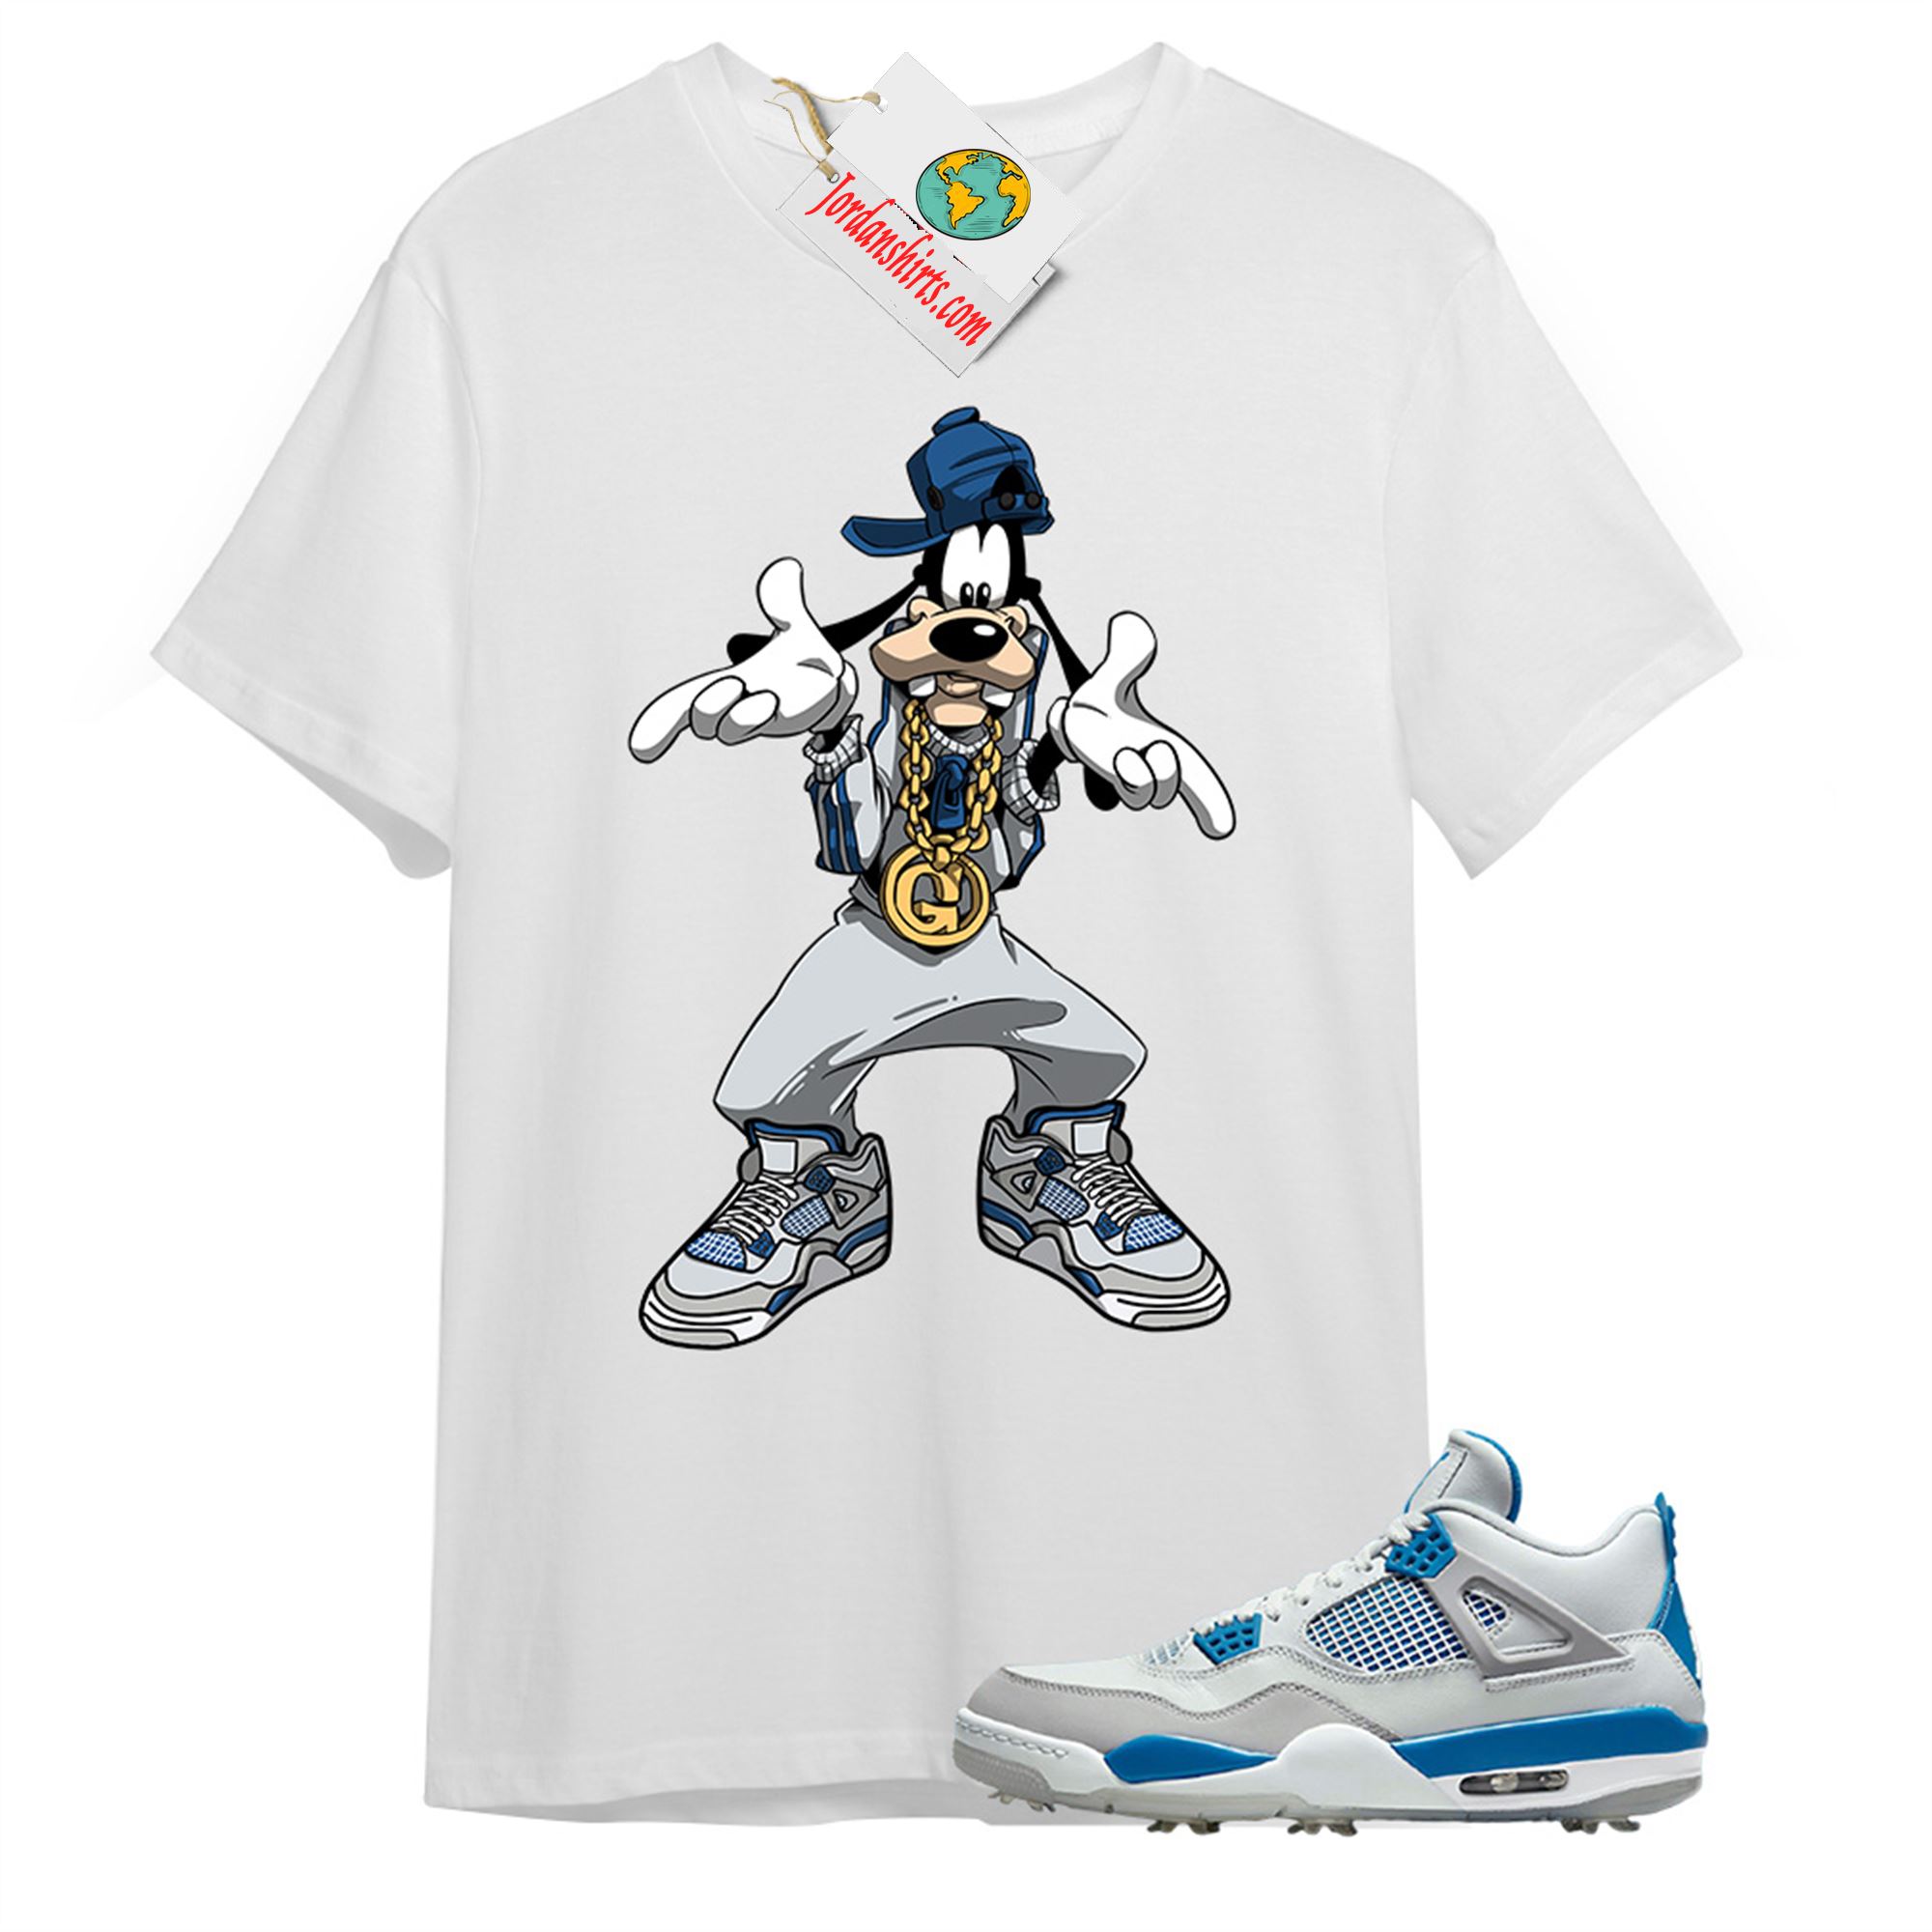 Jordan 4 Shirt, Goofy White T-shirt Air Jordan 4 Golf Military Blue 4s Plus Size Up To 5xl